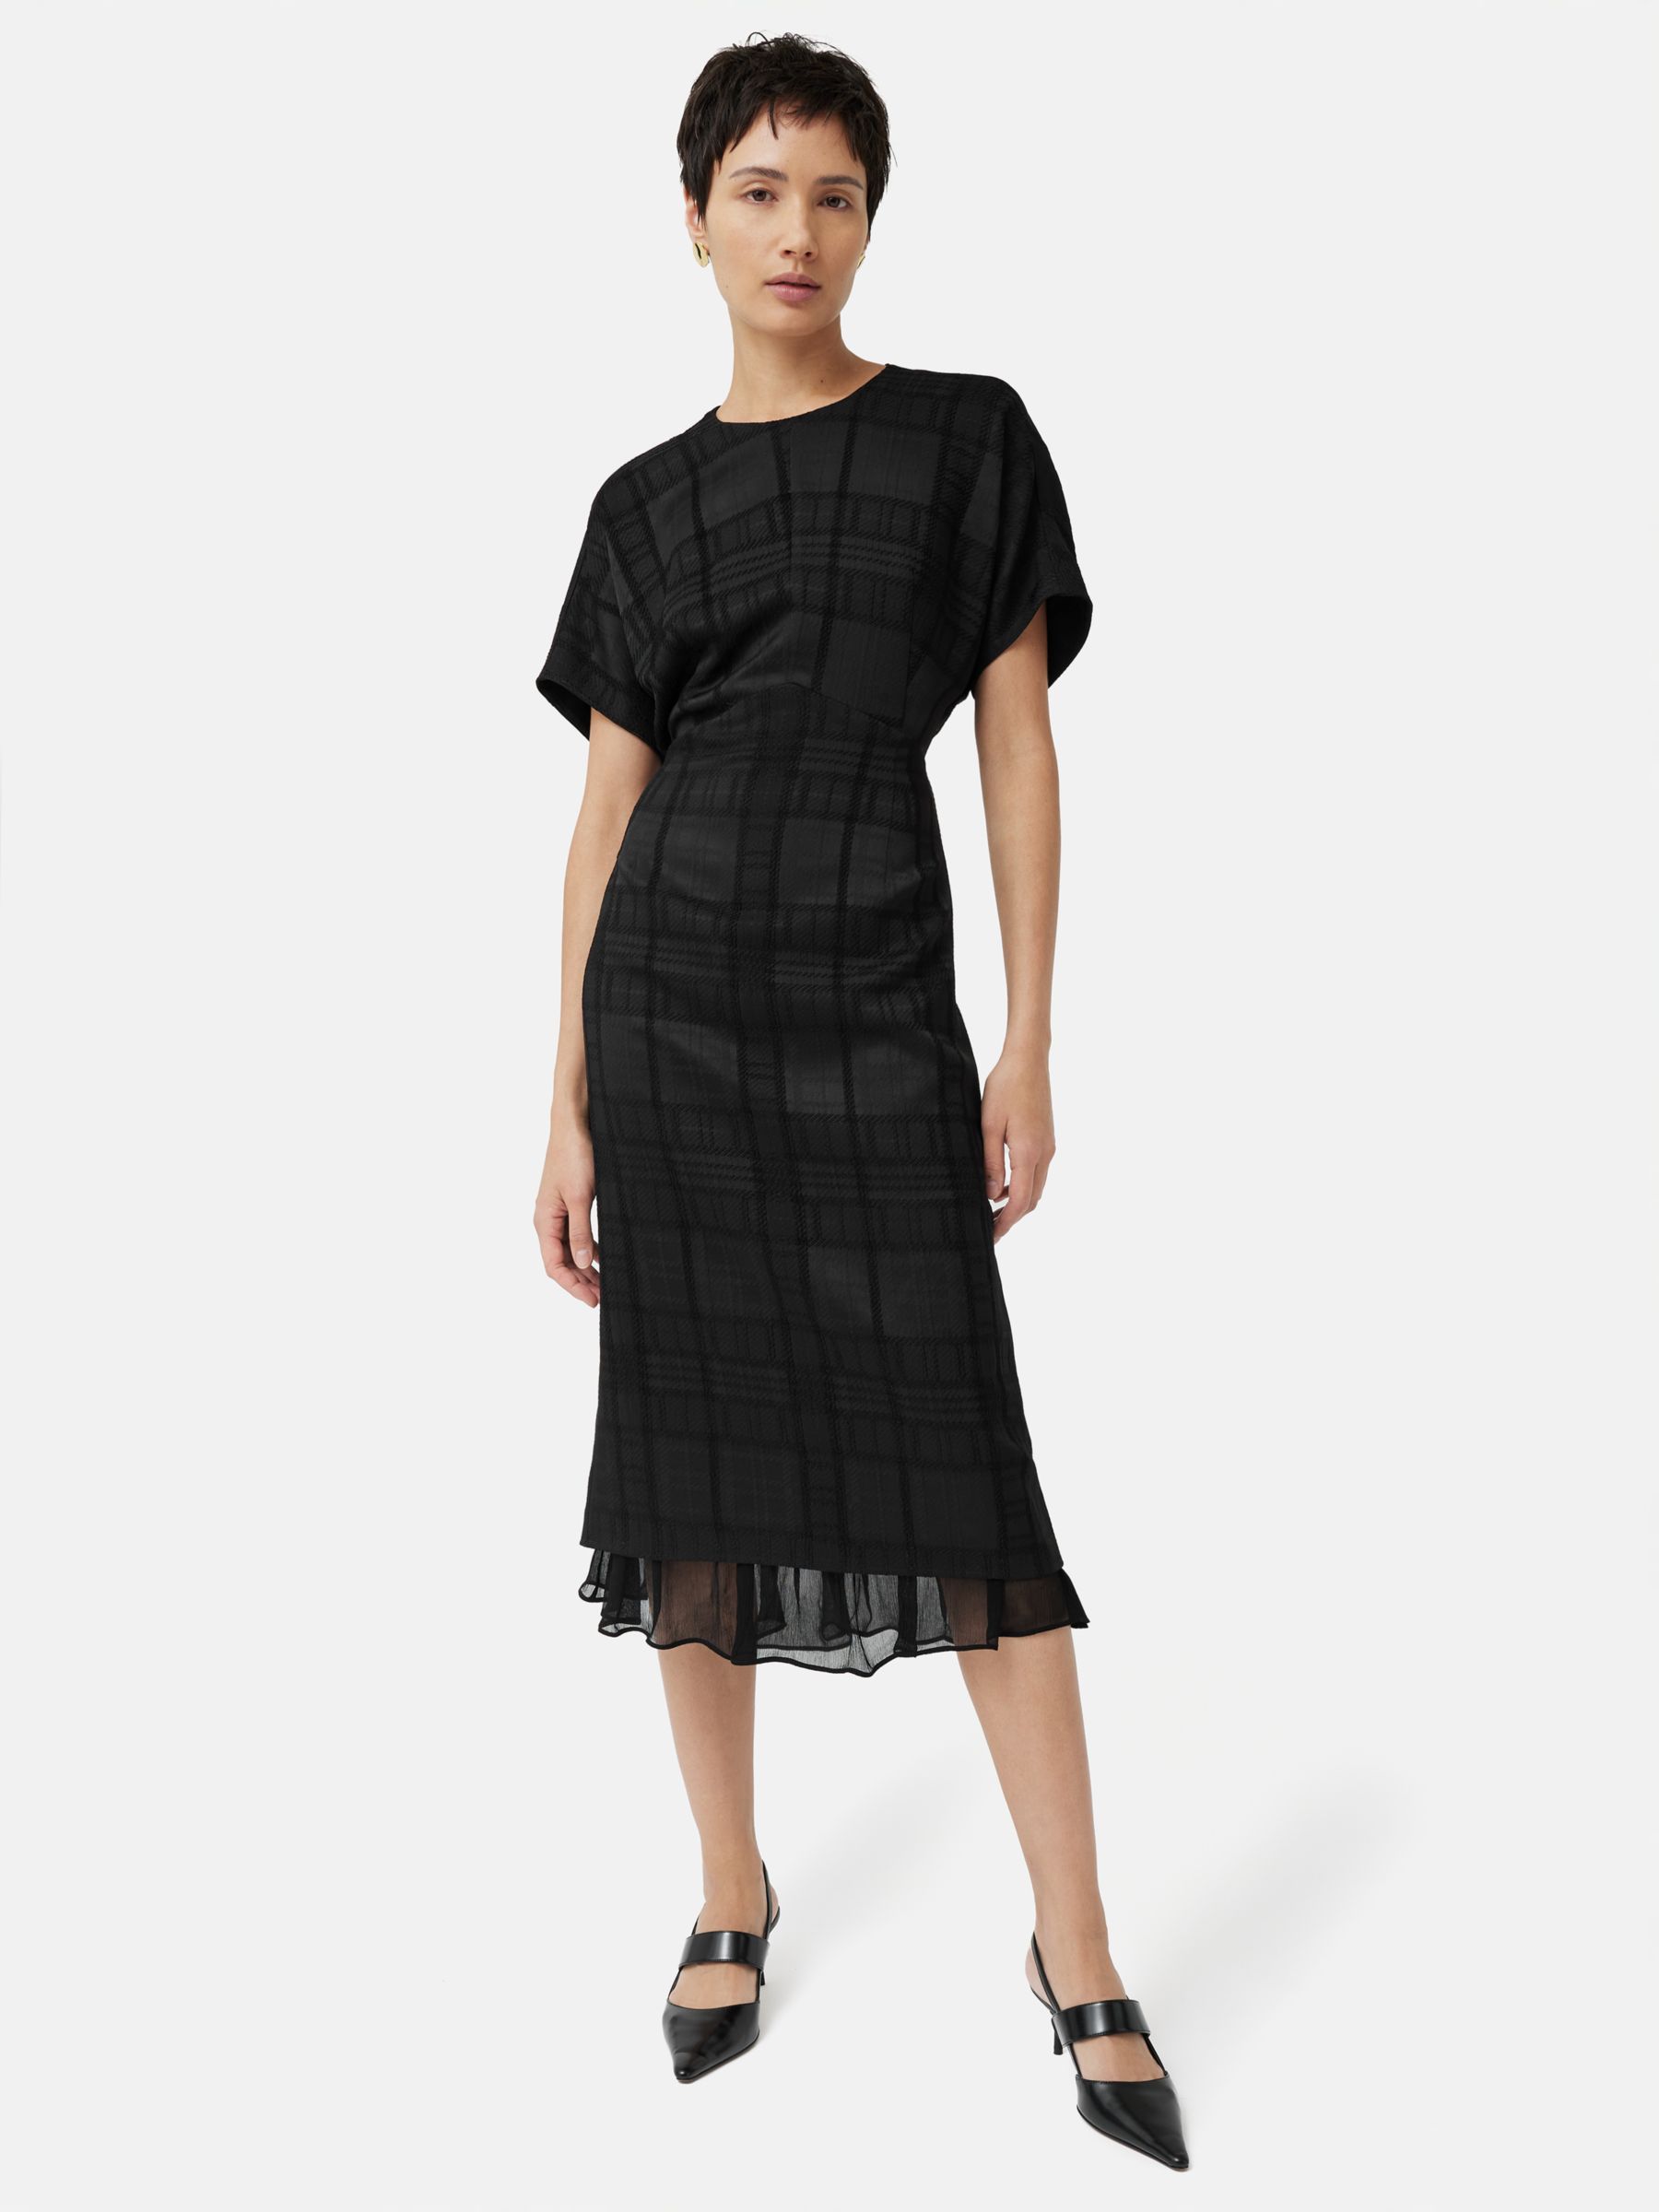 Jigsaw Textured Jacquard Check Midi Dress, Black, 6